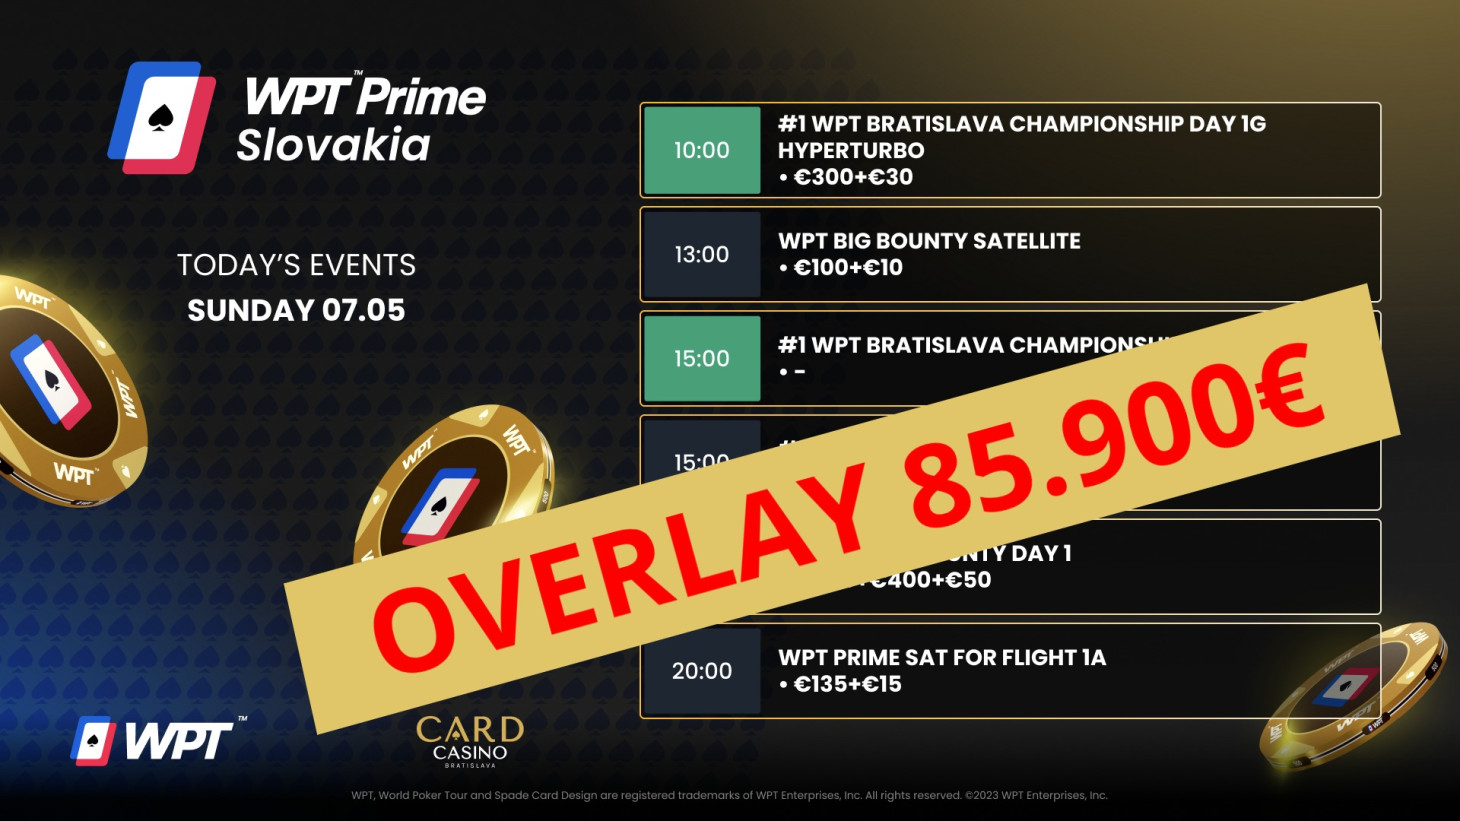 WPT Bratislava Championship: Overlay €85,900 before the last flight!